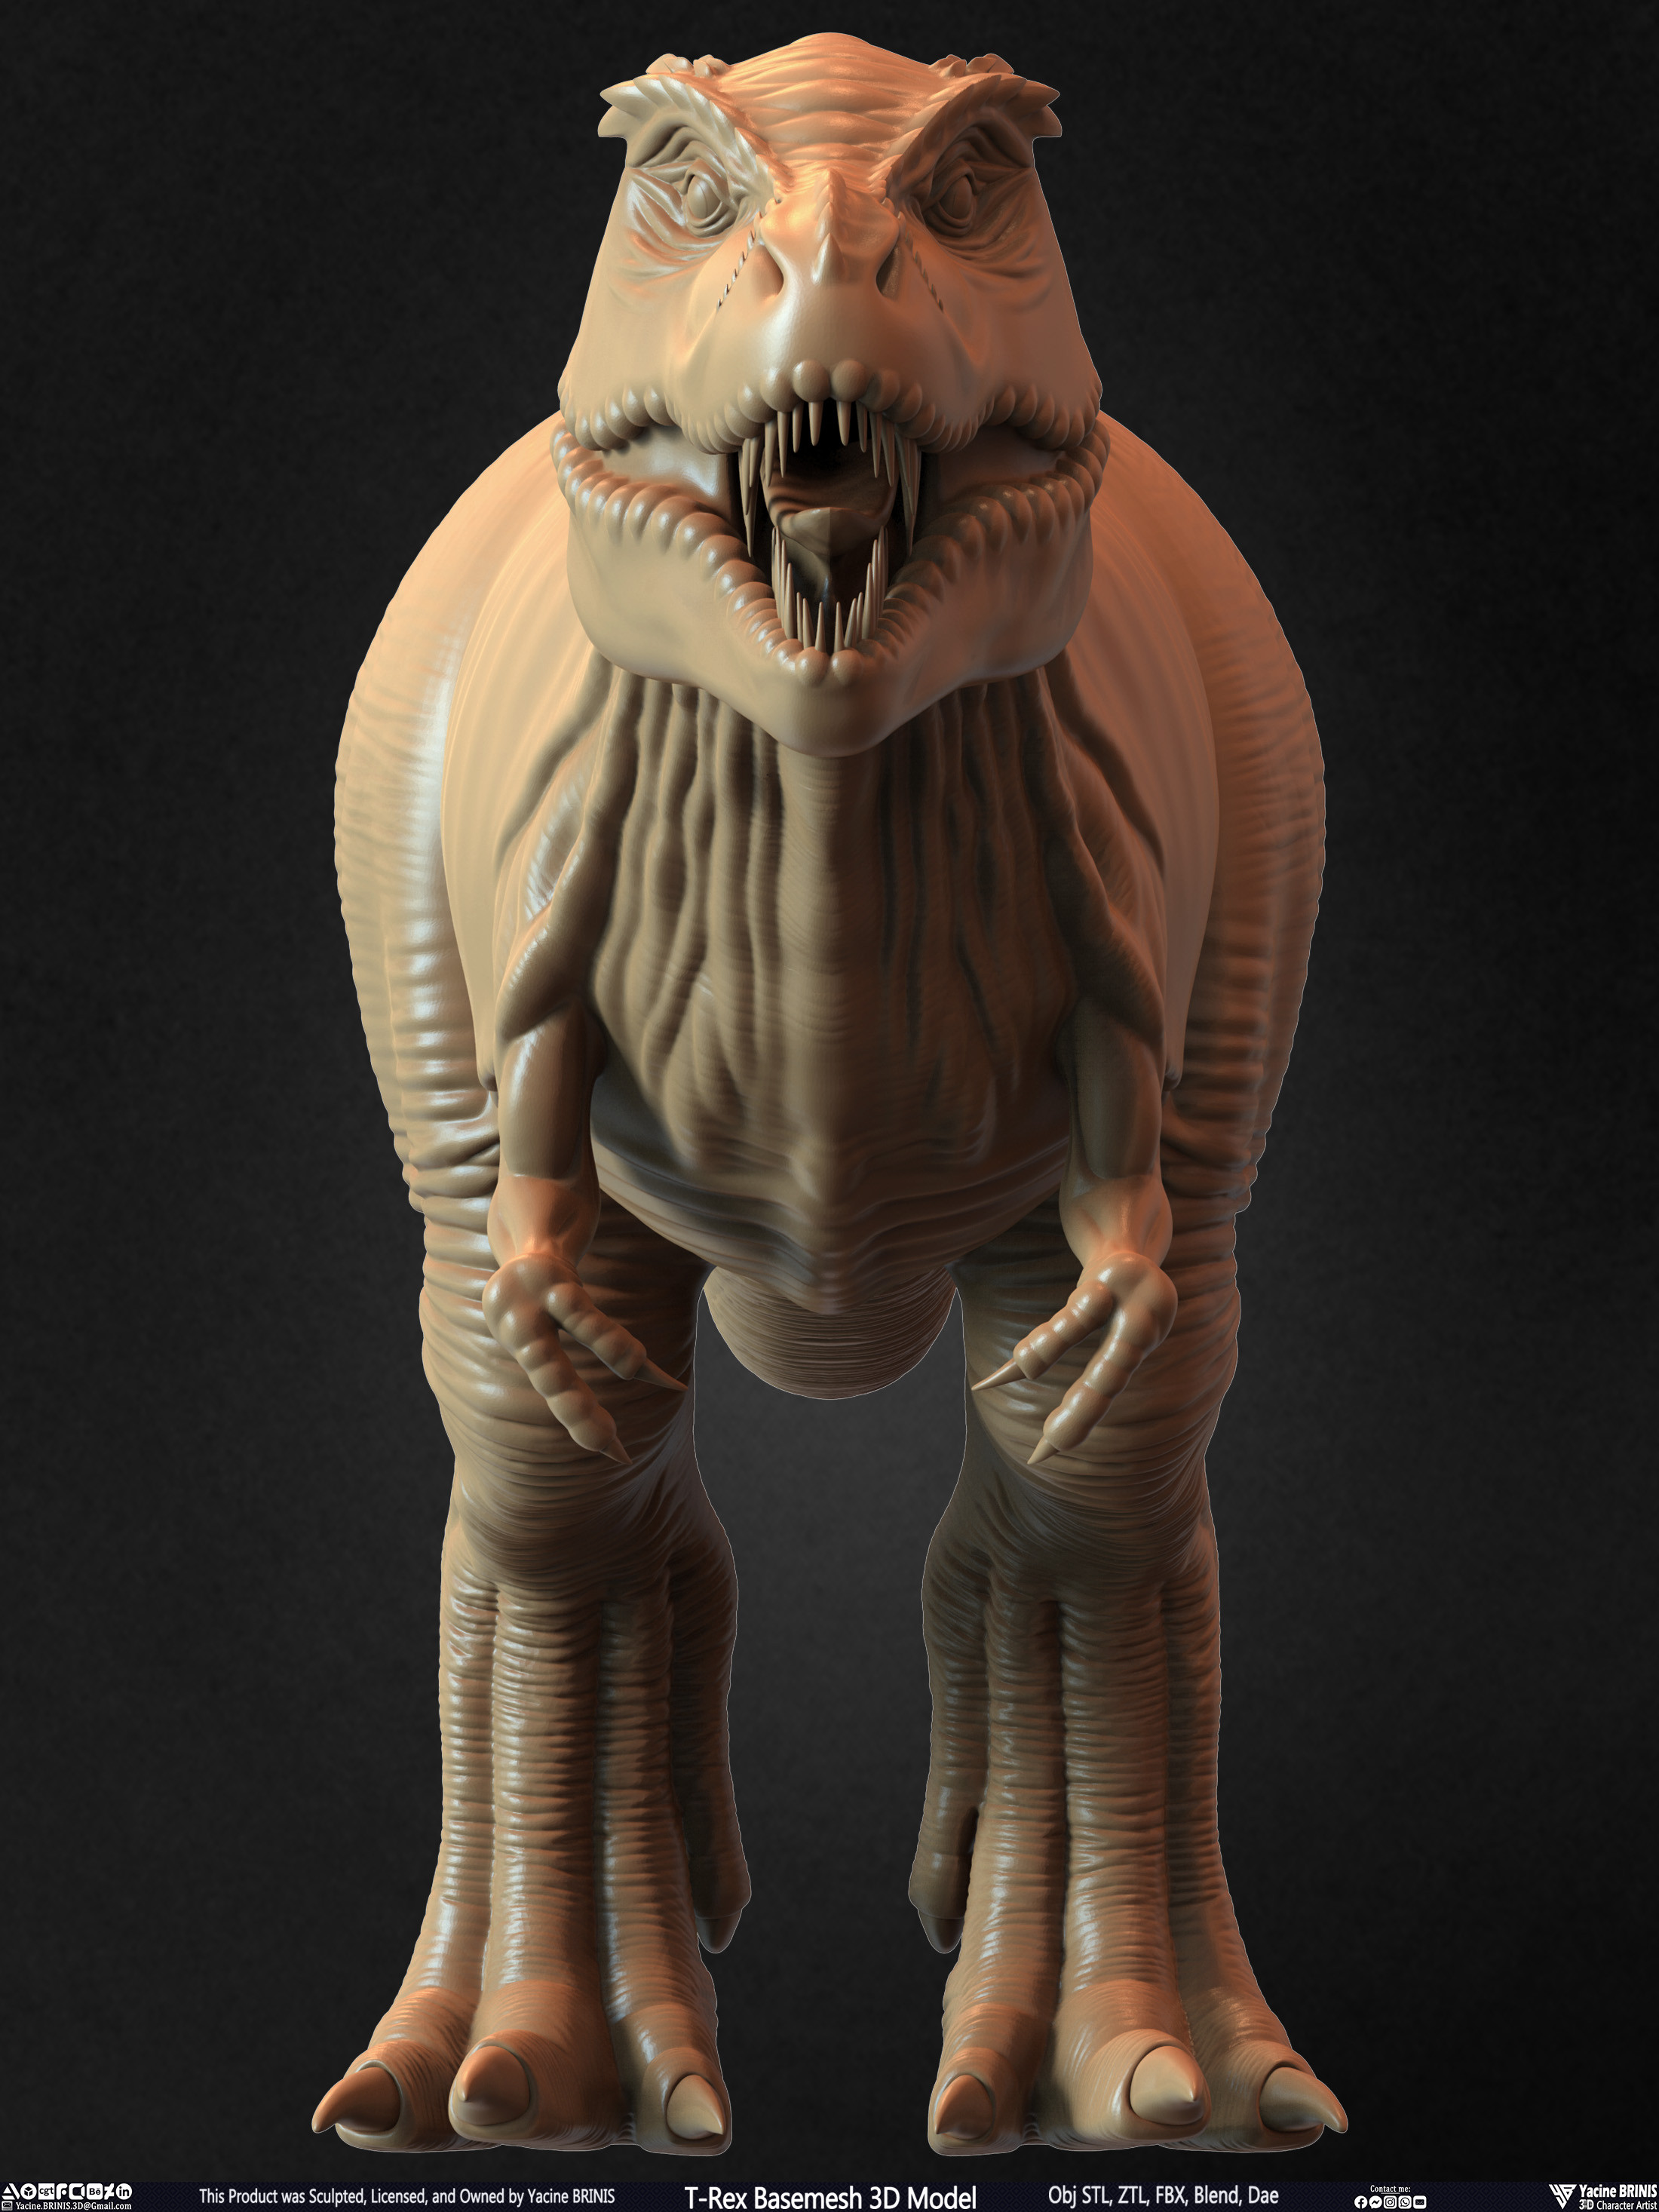 T-Rex Basemesh 3D Model (Tyrannosaurus Rex) Sculpted By Yacine BRINIS Set 013